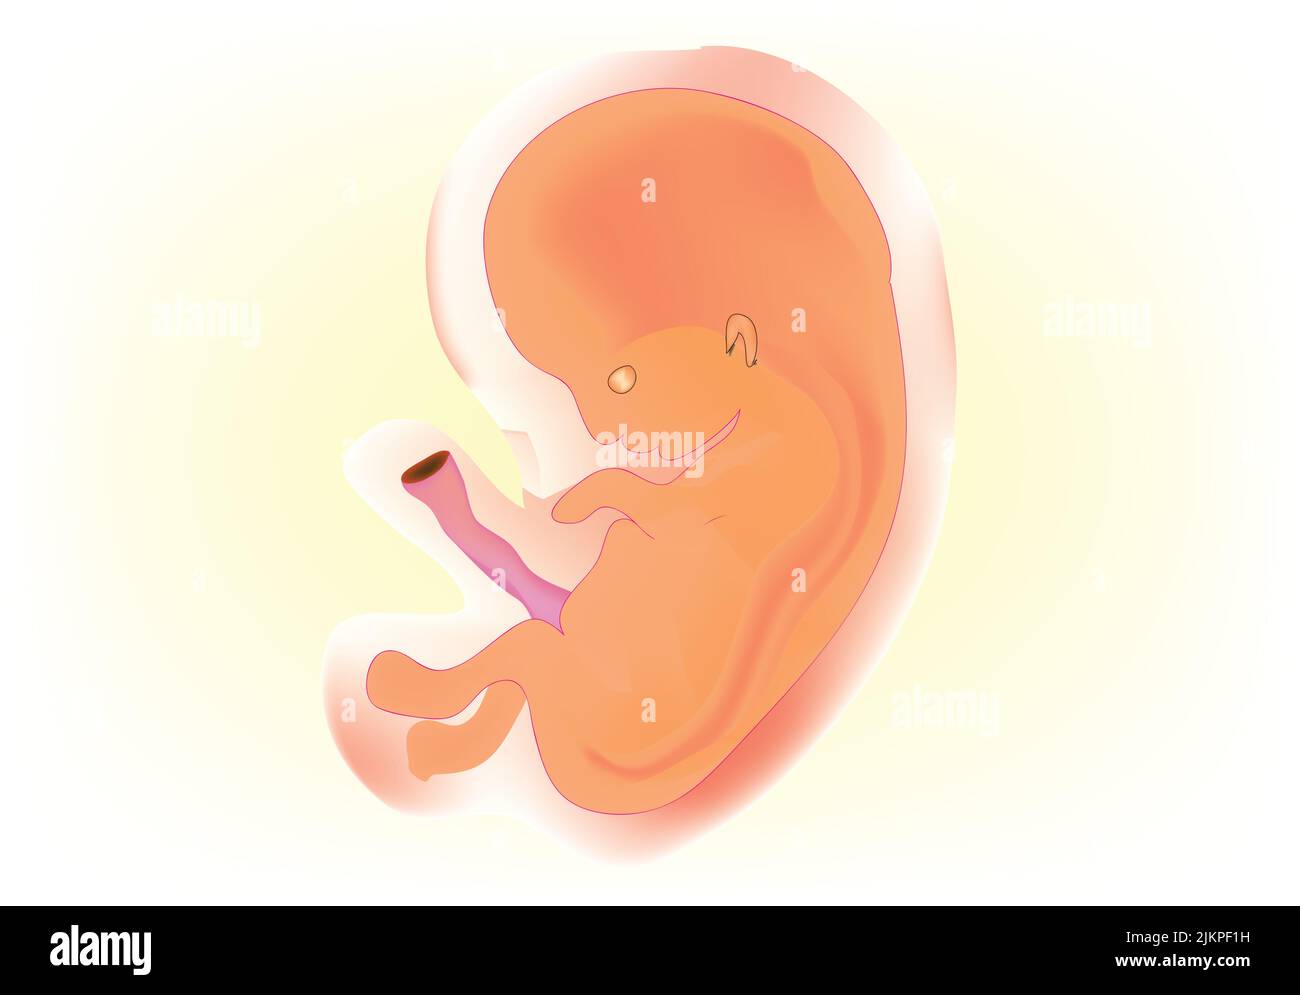 Anatomia embrionale umana Foto Stock